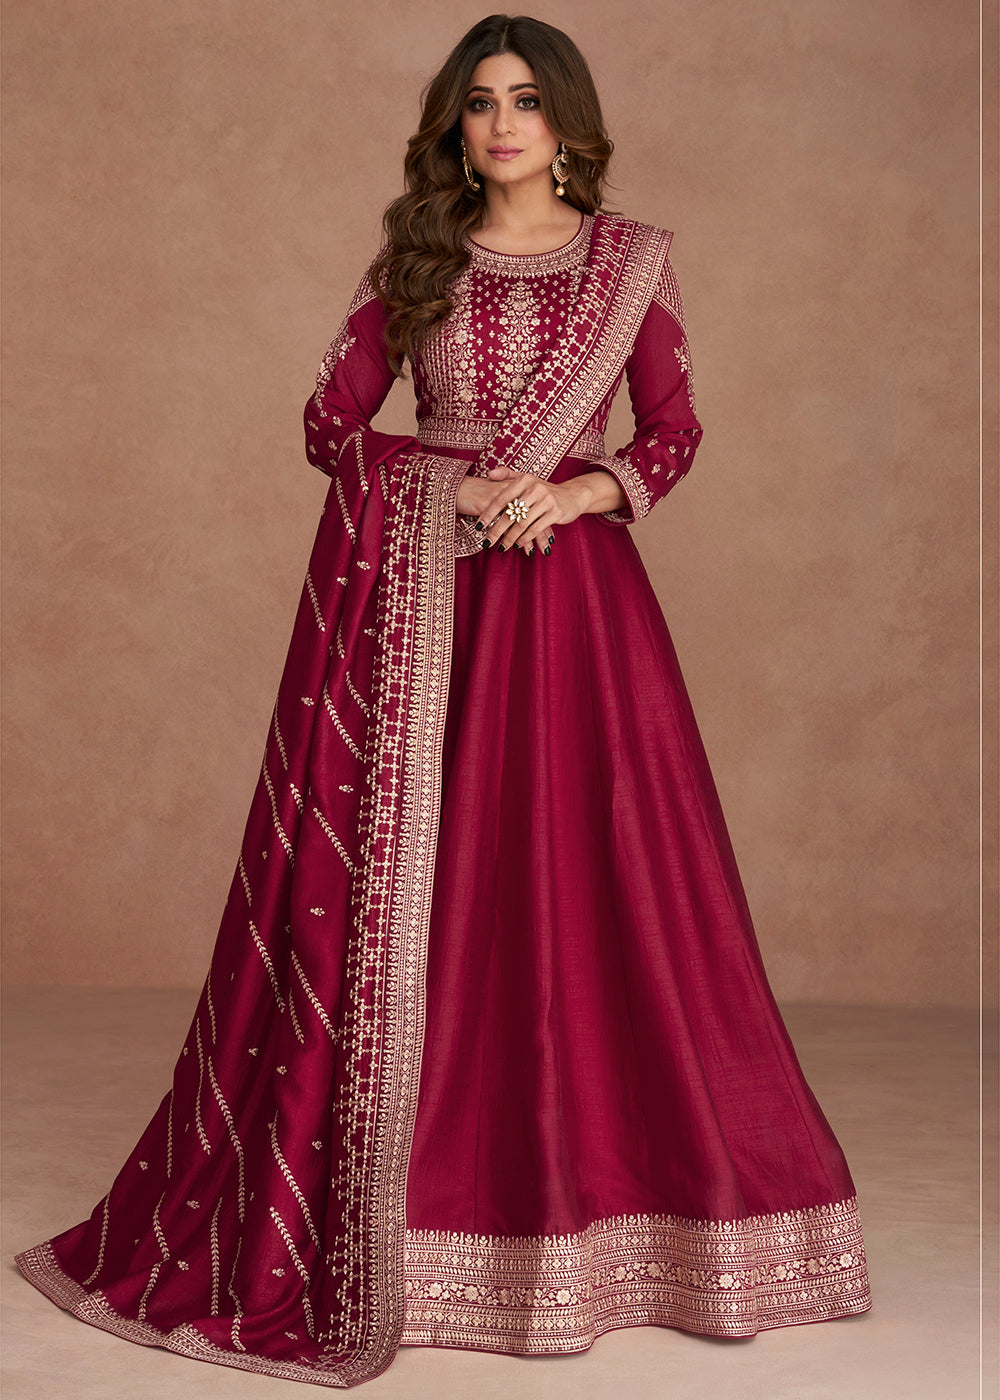 Buy Now Shamita Shetty Festive Crimson Pink Silk Anarkali Suit Online in USA, UK, Australia, New Zealand, Canada, Italy & Worldwide at Empress Clothing. 